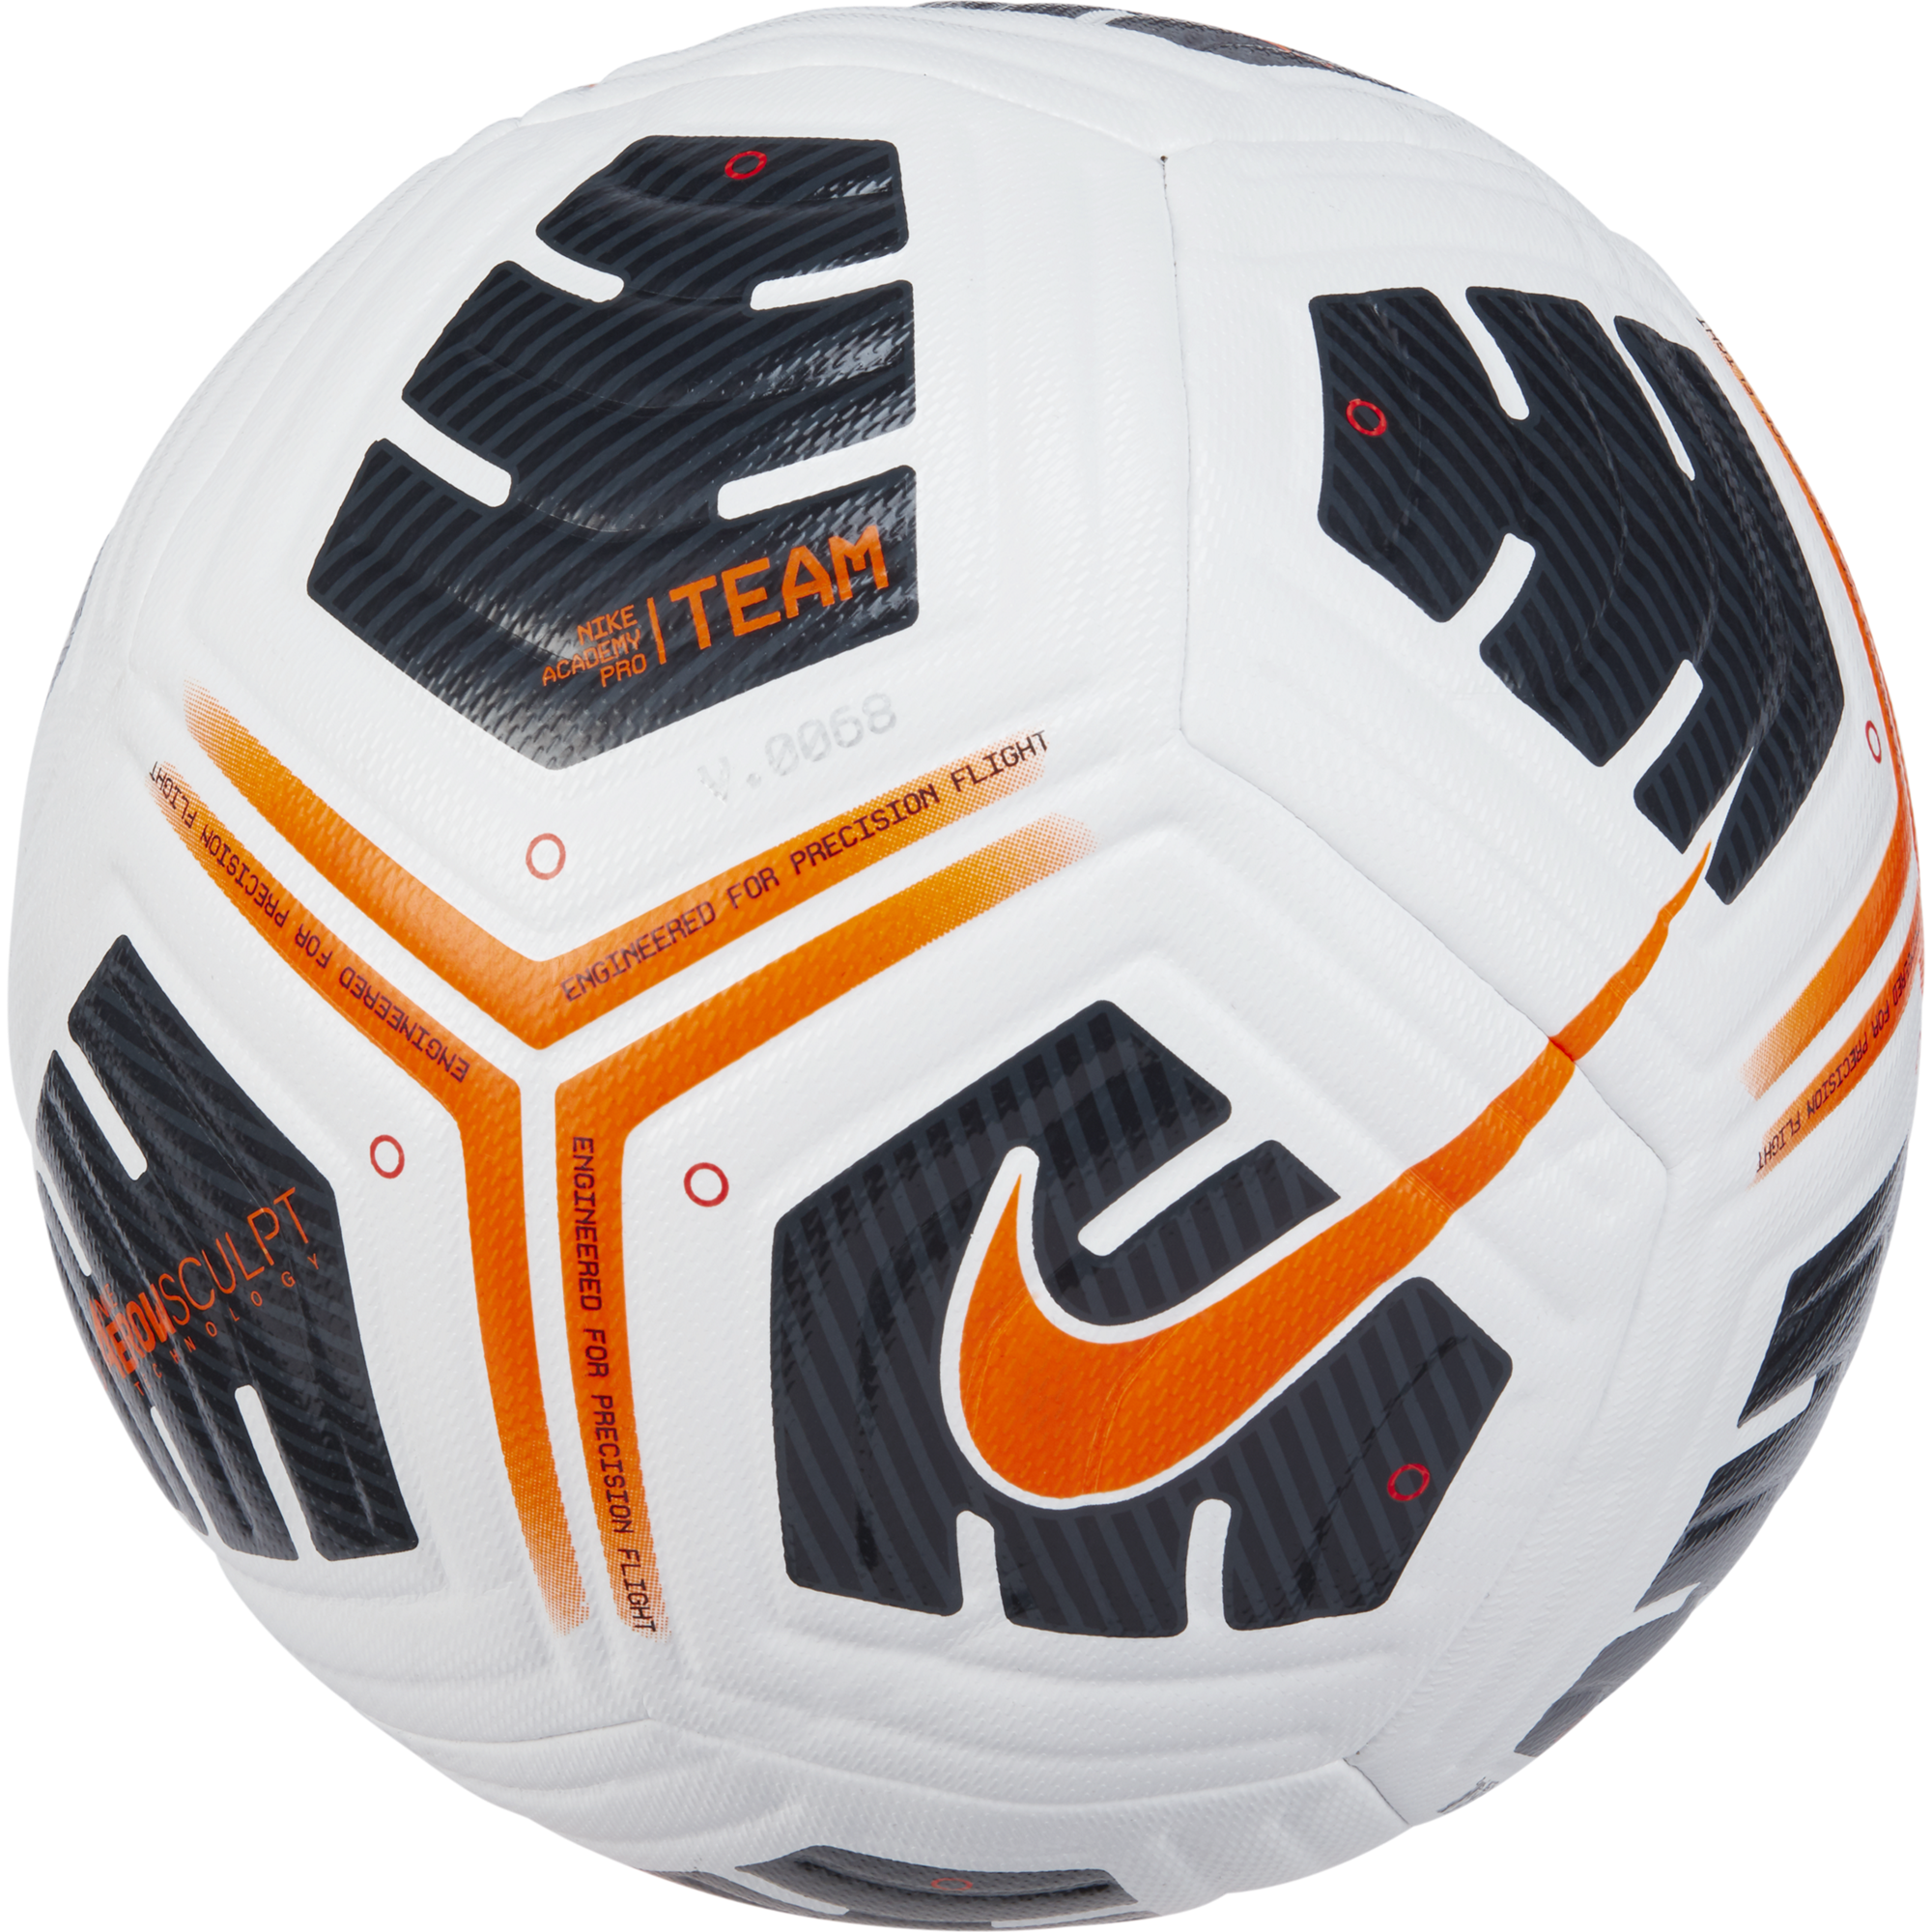 Academy Pro Fifa Size 4 & 5 Ball 2021